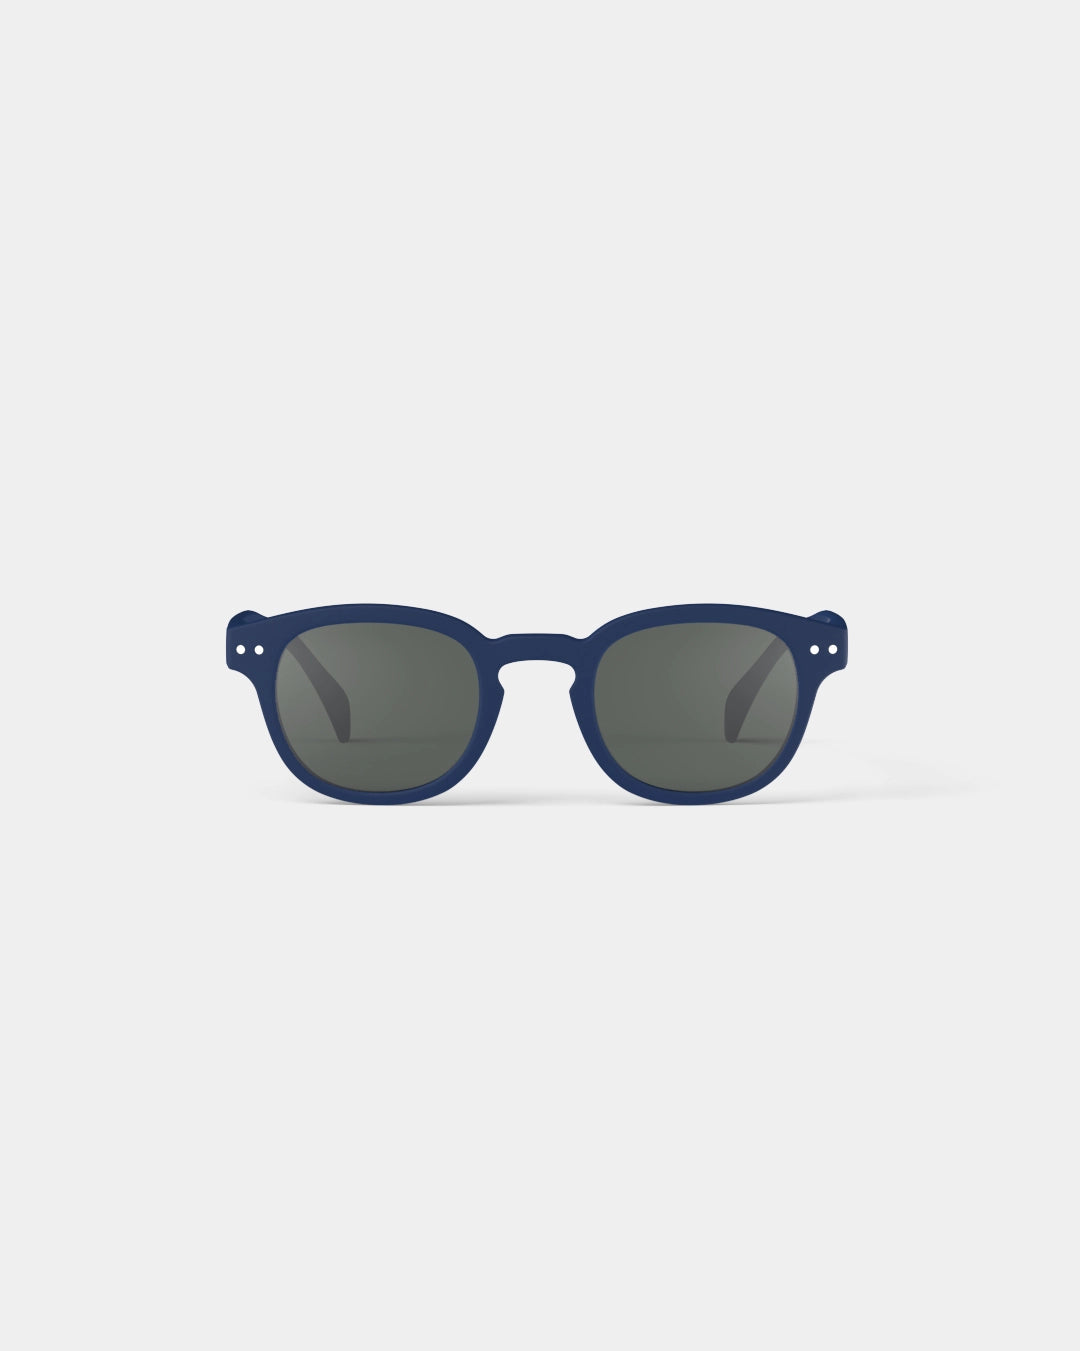 IZIPIZI Sunglasses #C | Navy Blue